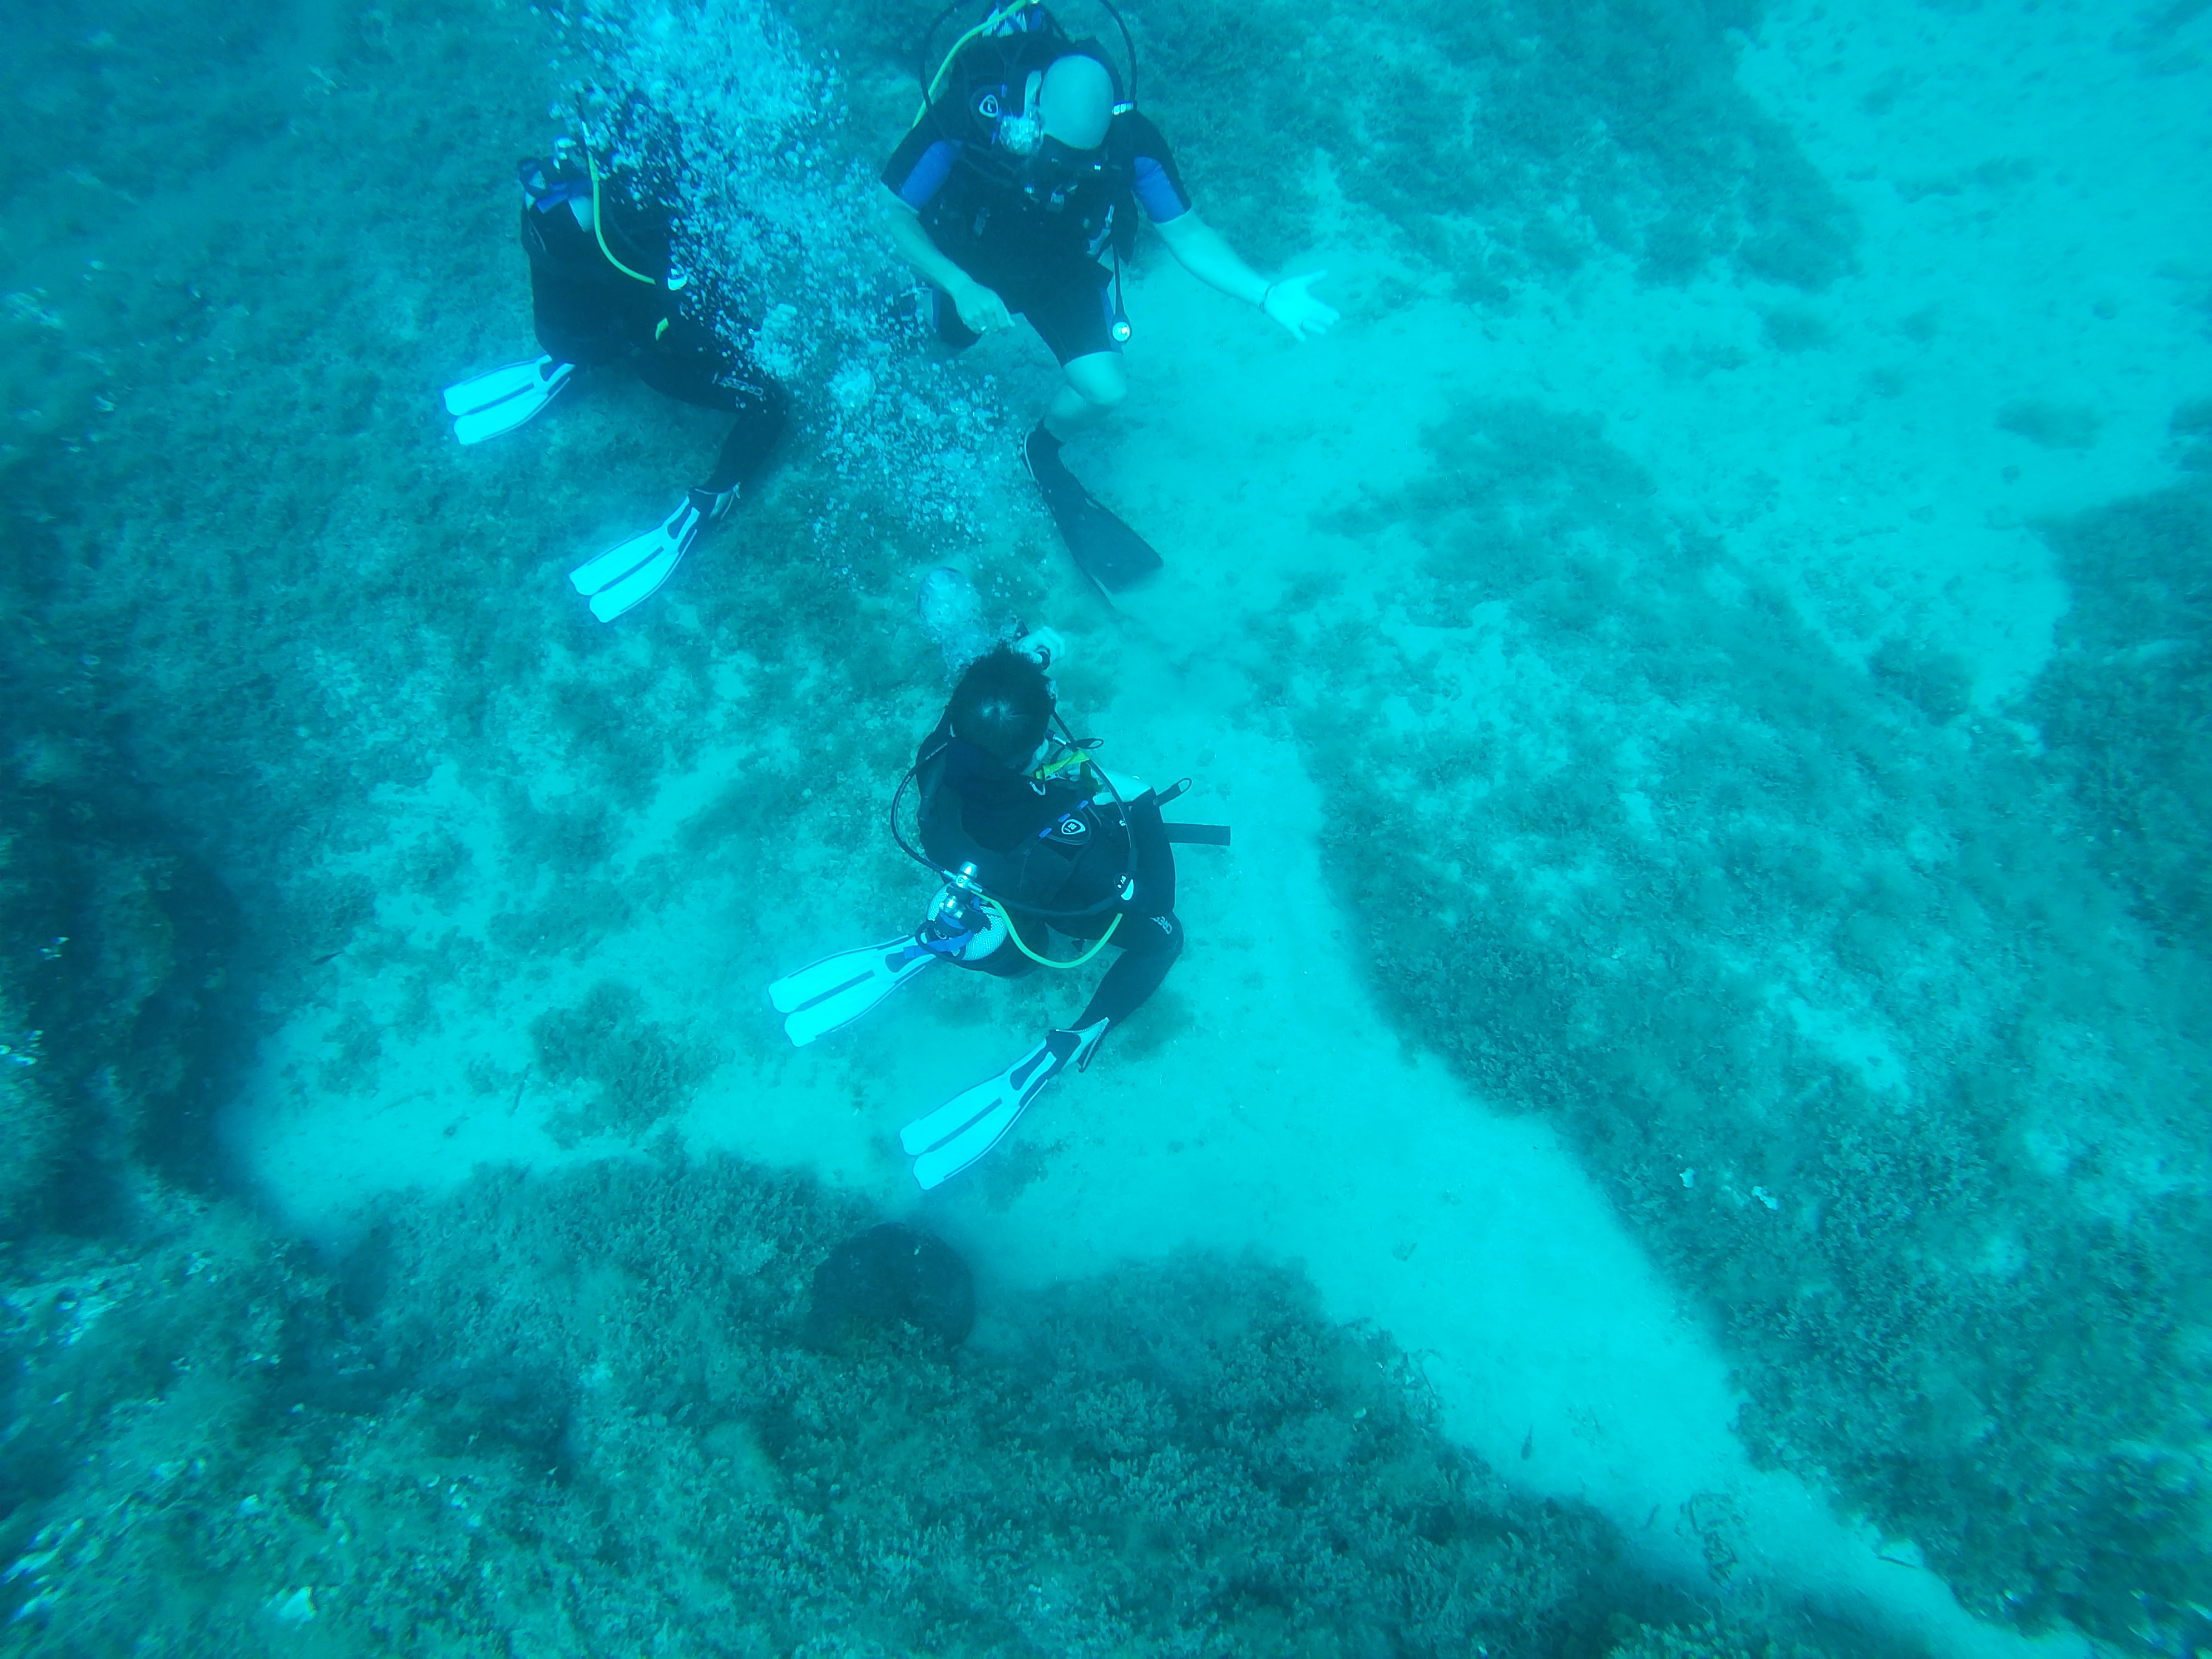 Beginner's SSI Basic Diver Program 2 Dives in Crete